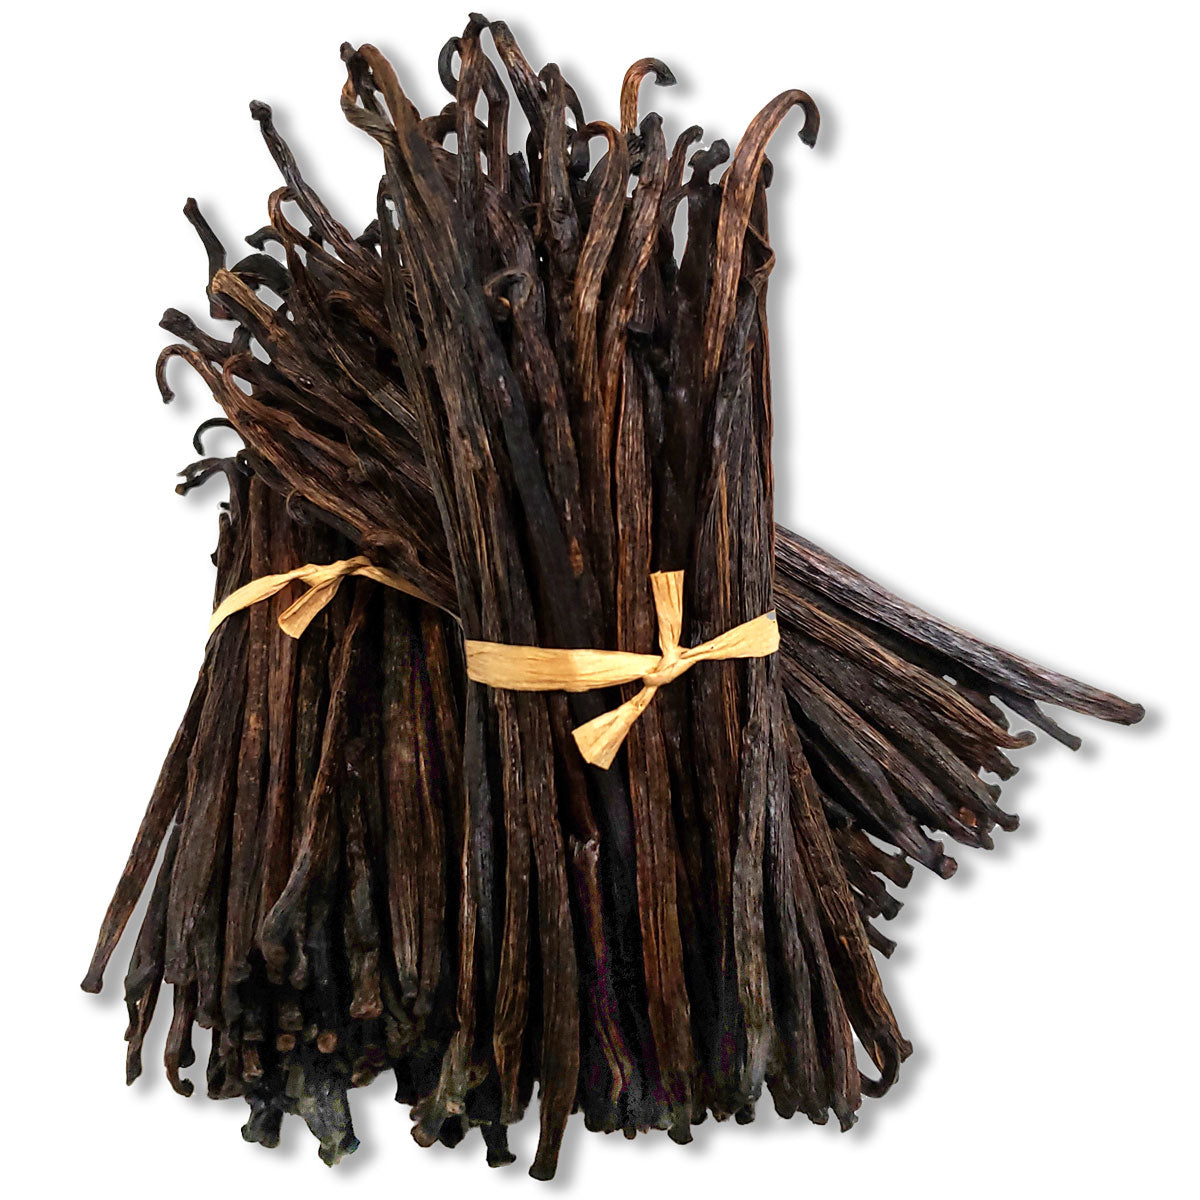 [LIQUIDATION] Extract Grade Ugandan Vanilla Beans for Extracts—Planifolia Variety, Classic & Creamy